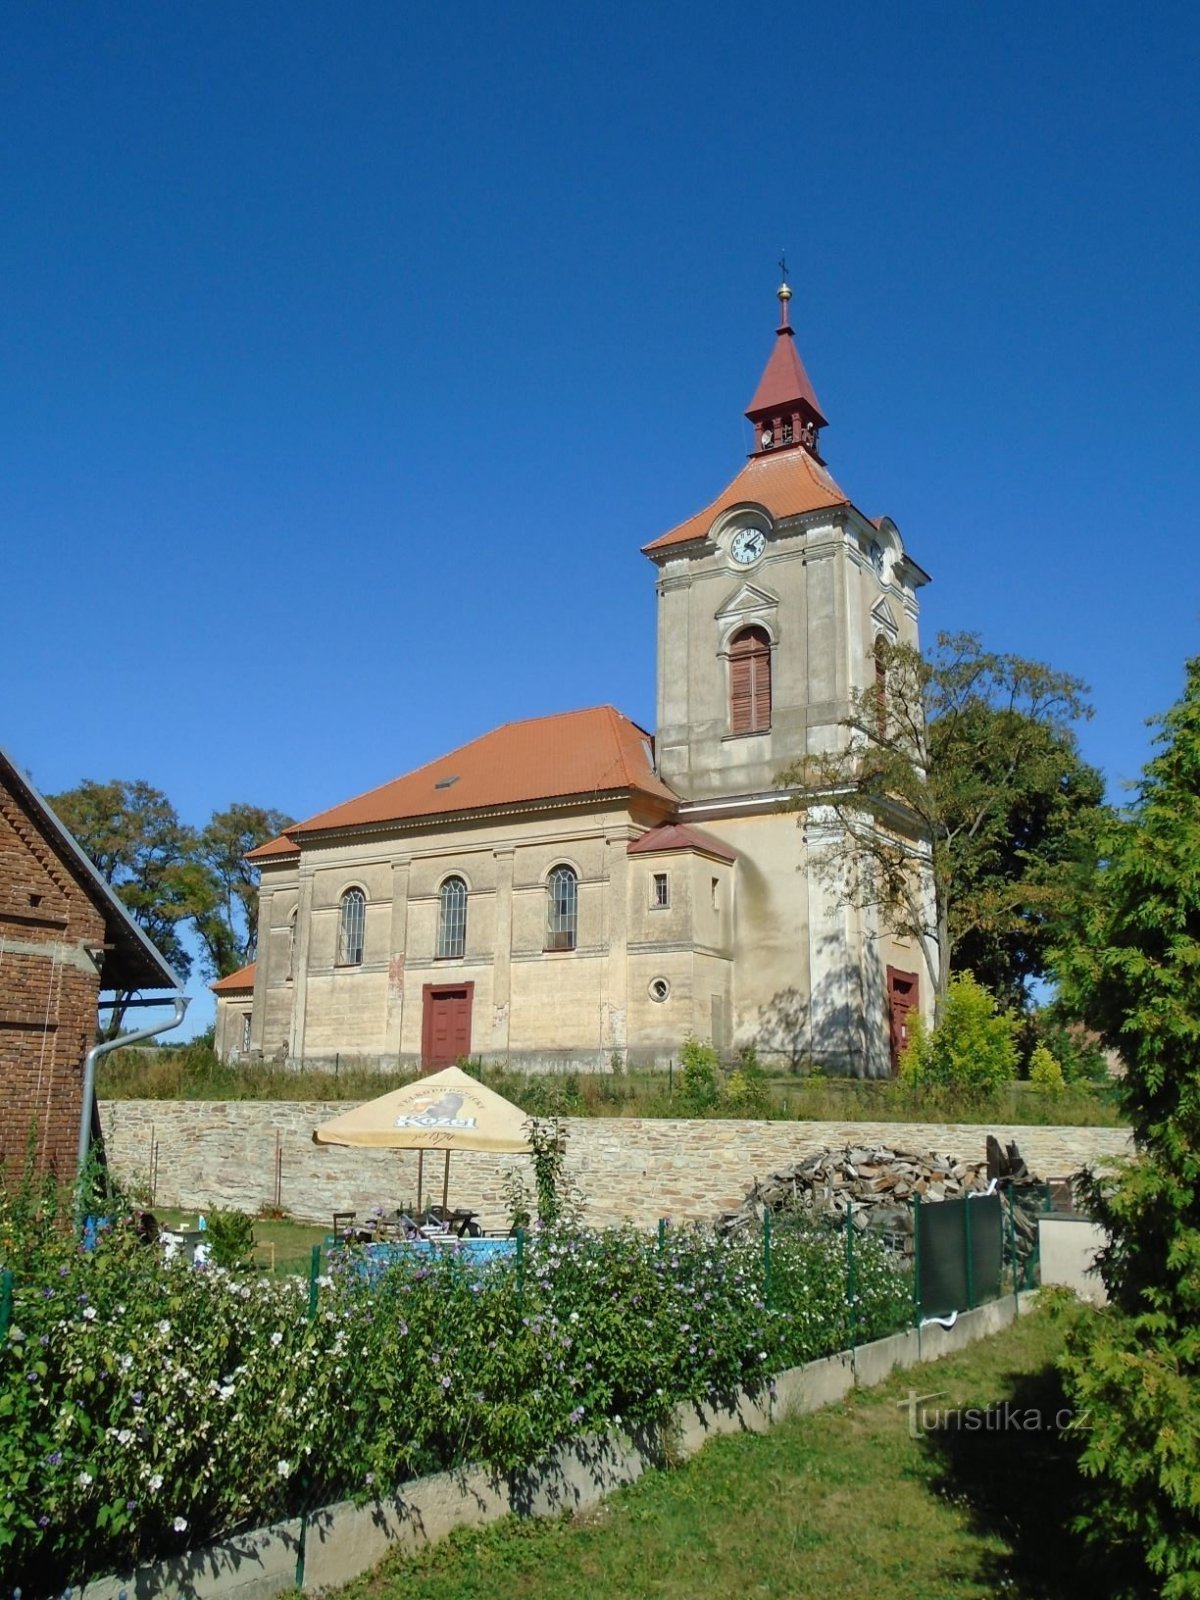 Kerk van St. Peter en Paul (Jeníkovice, 6.8.2018 augustus XNUMX)